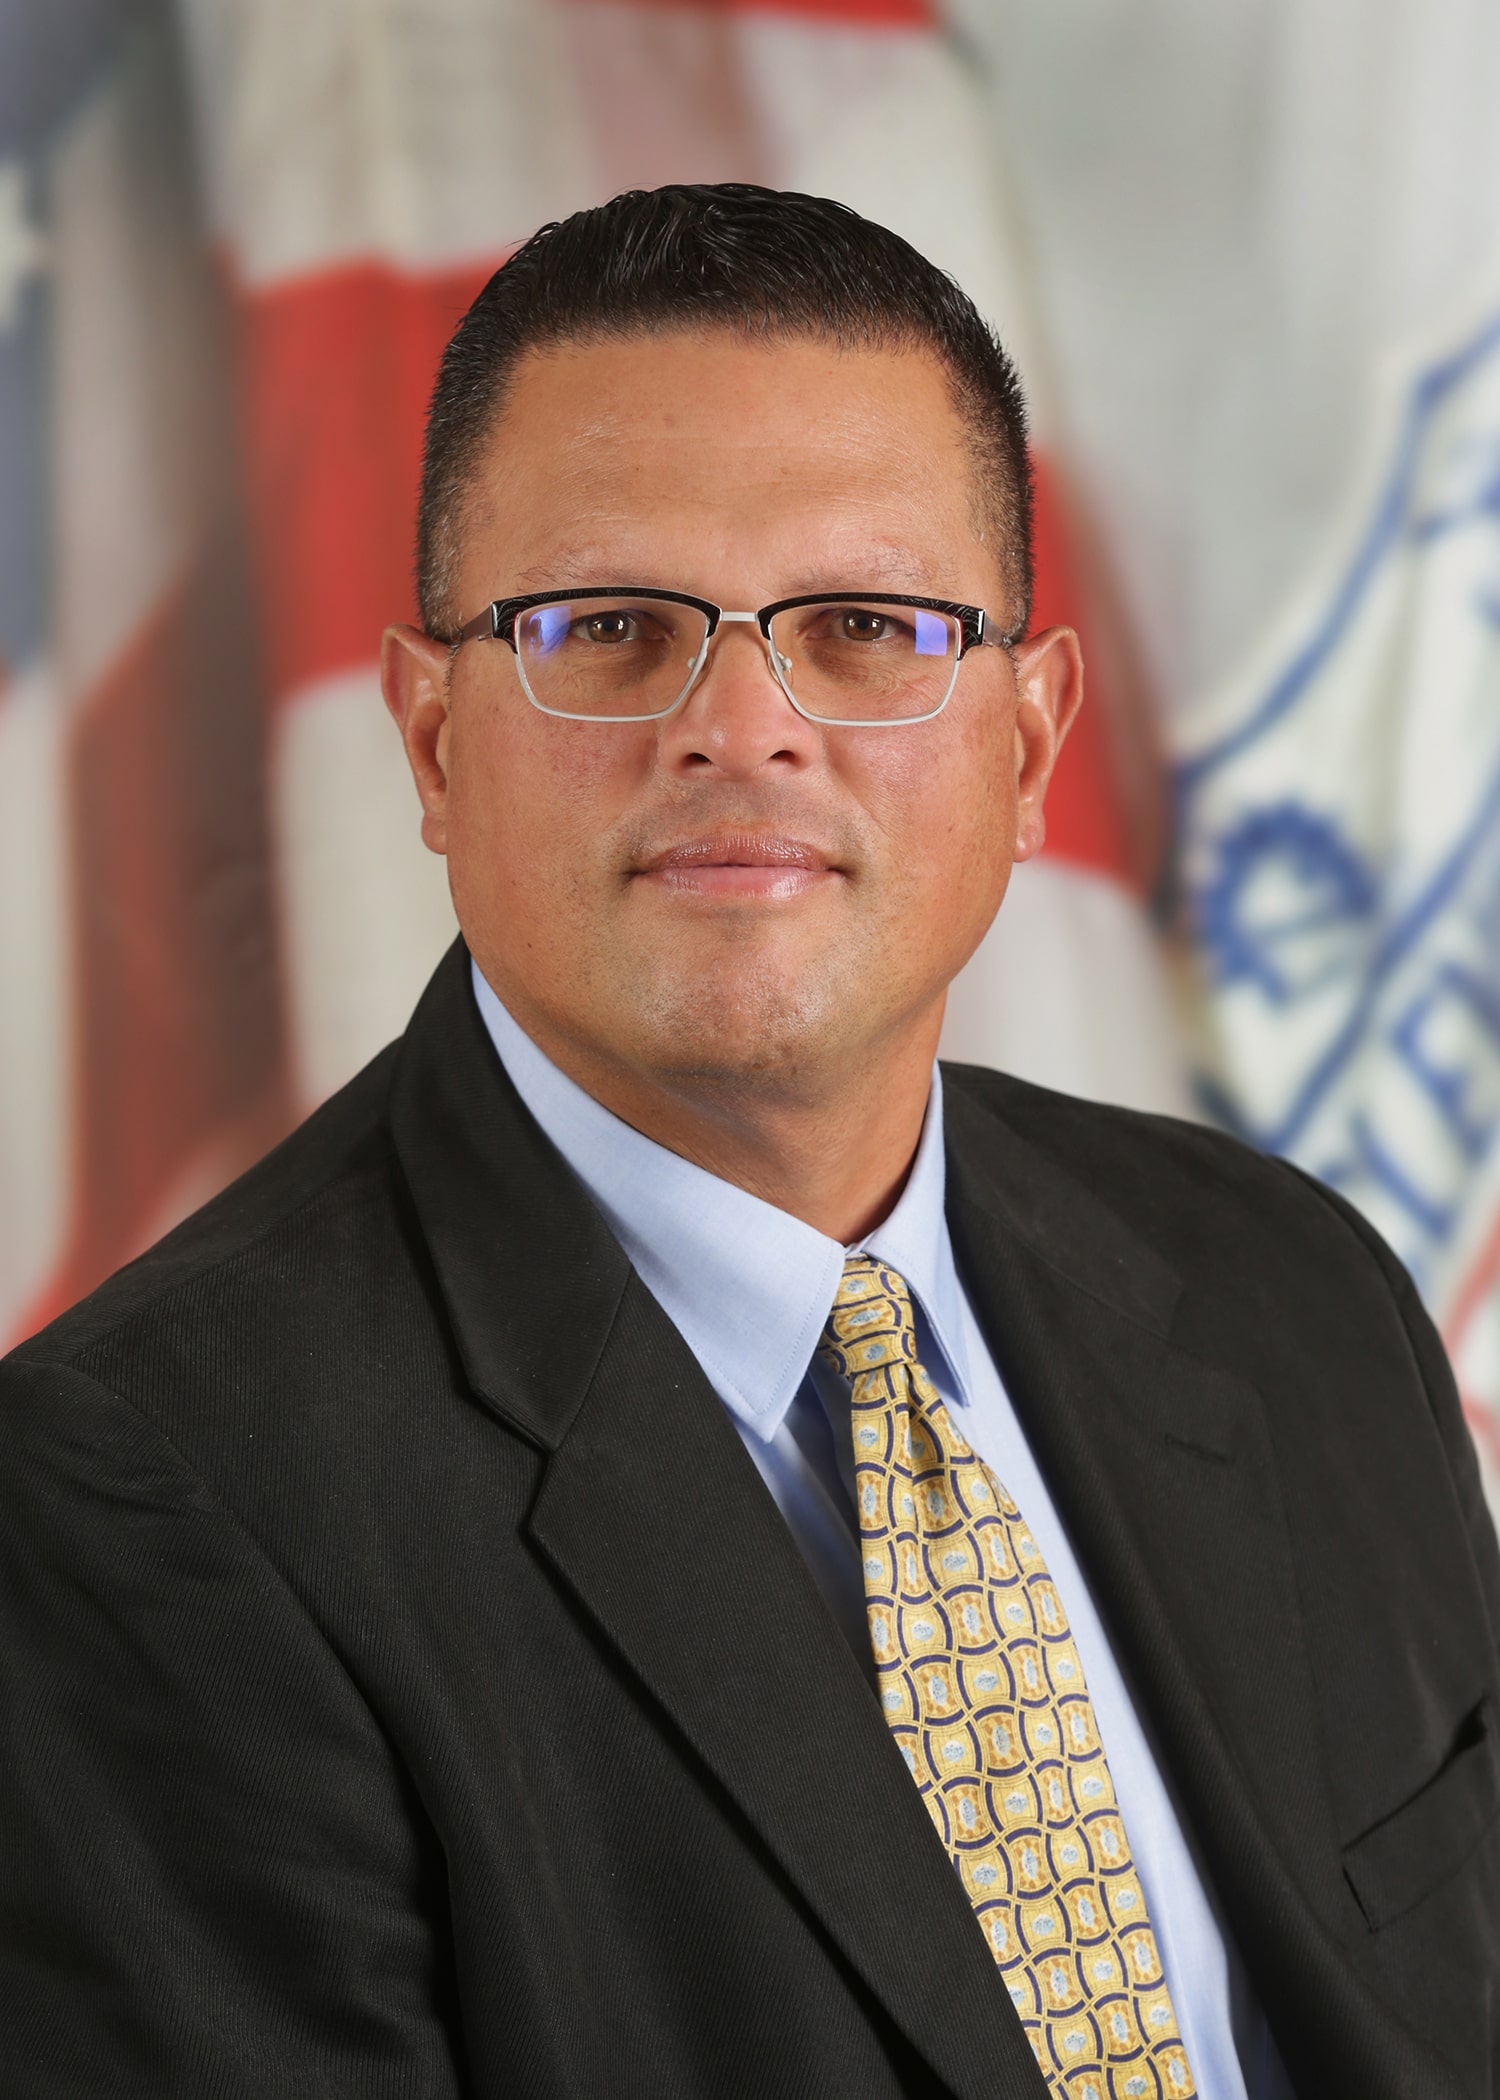 Deputy Commissioner Lopez